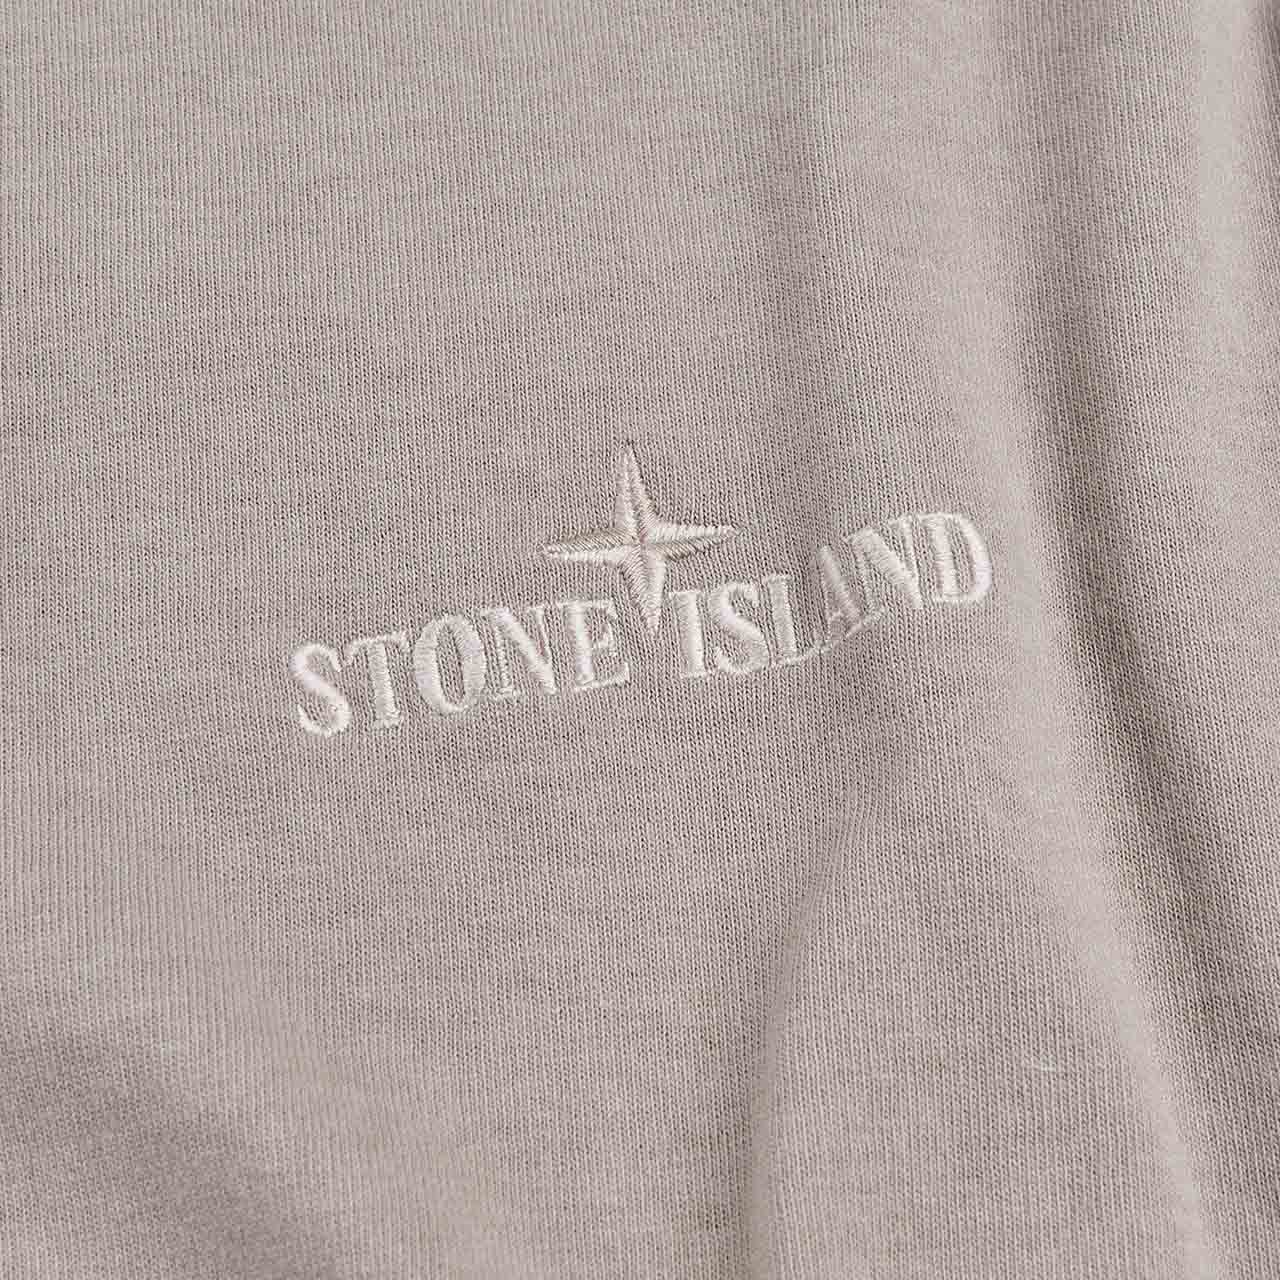 stone island t-shirt (dove grey)